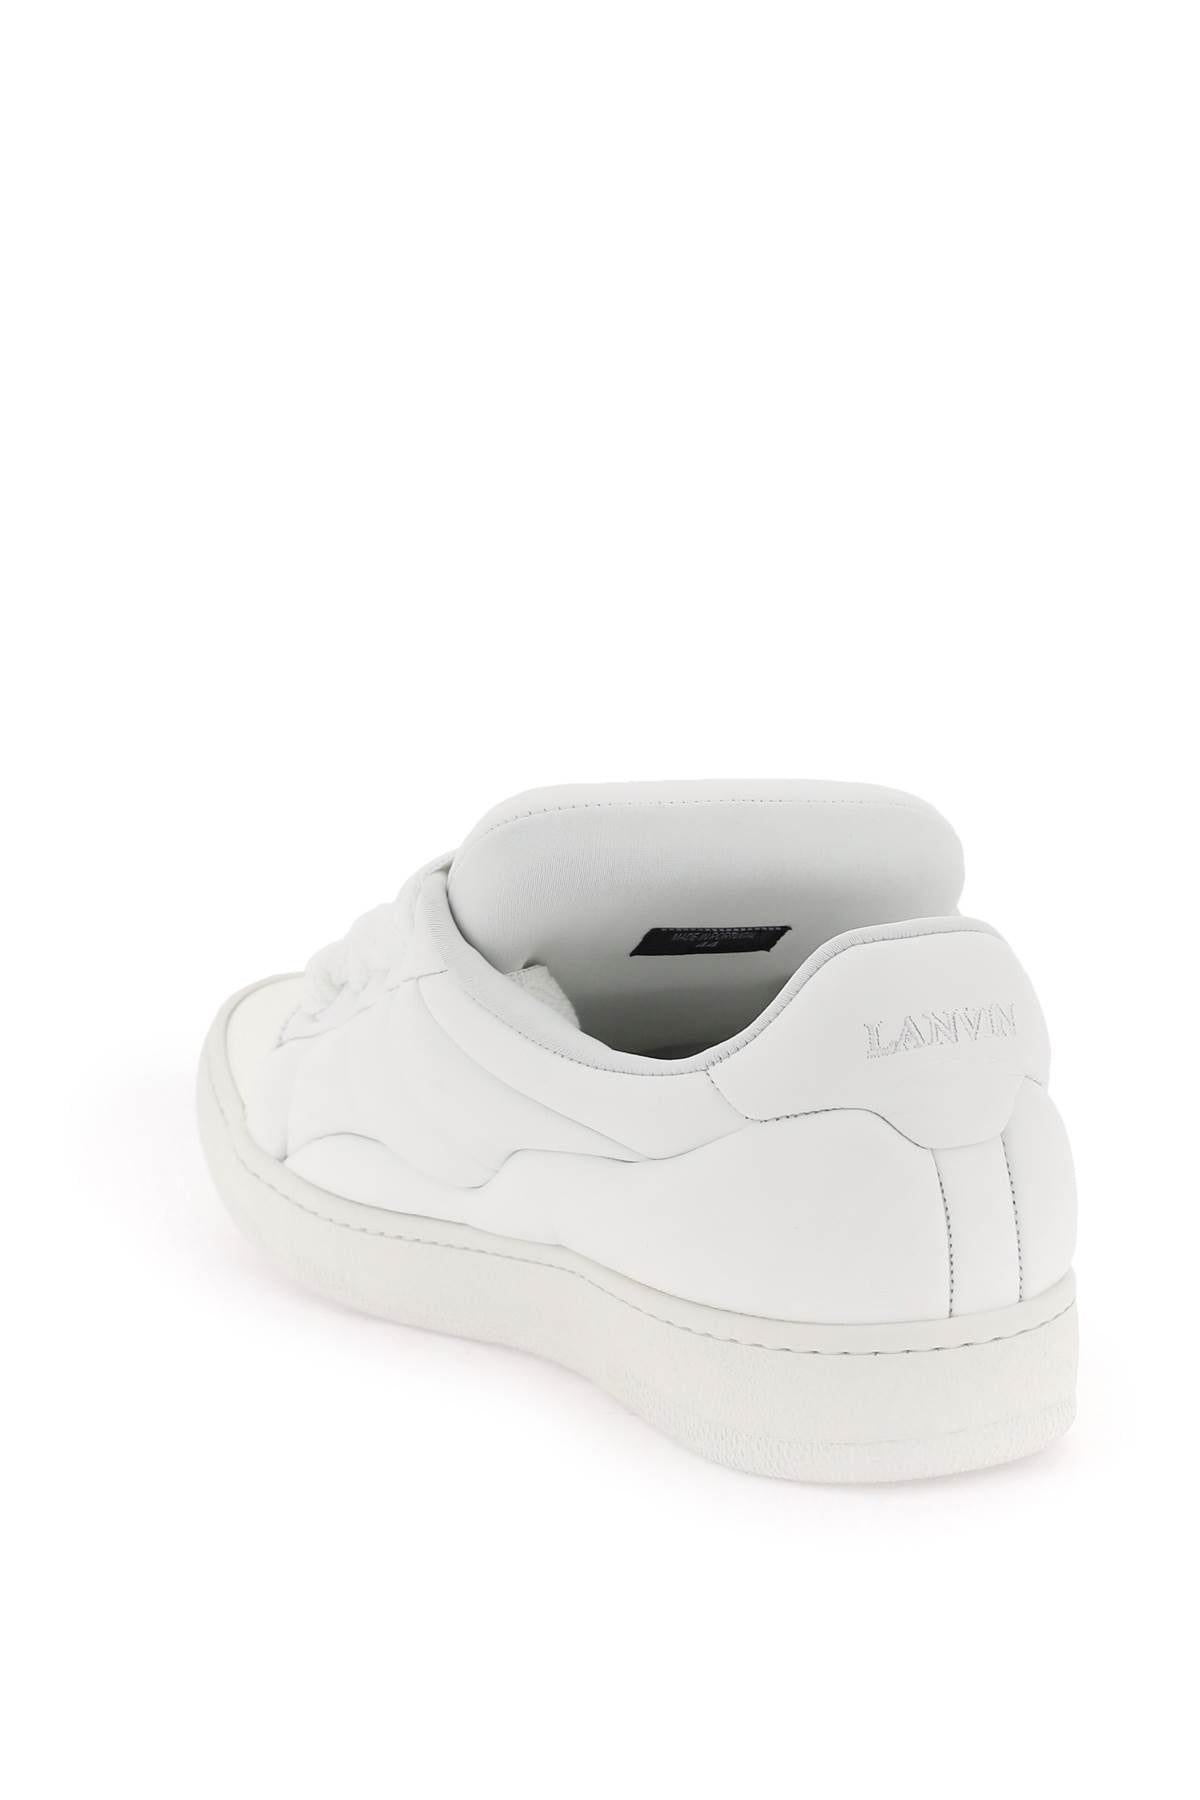 Lanvin curb sneakers-2